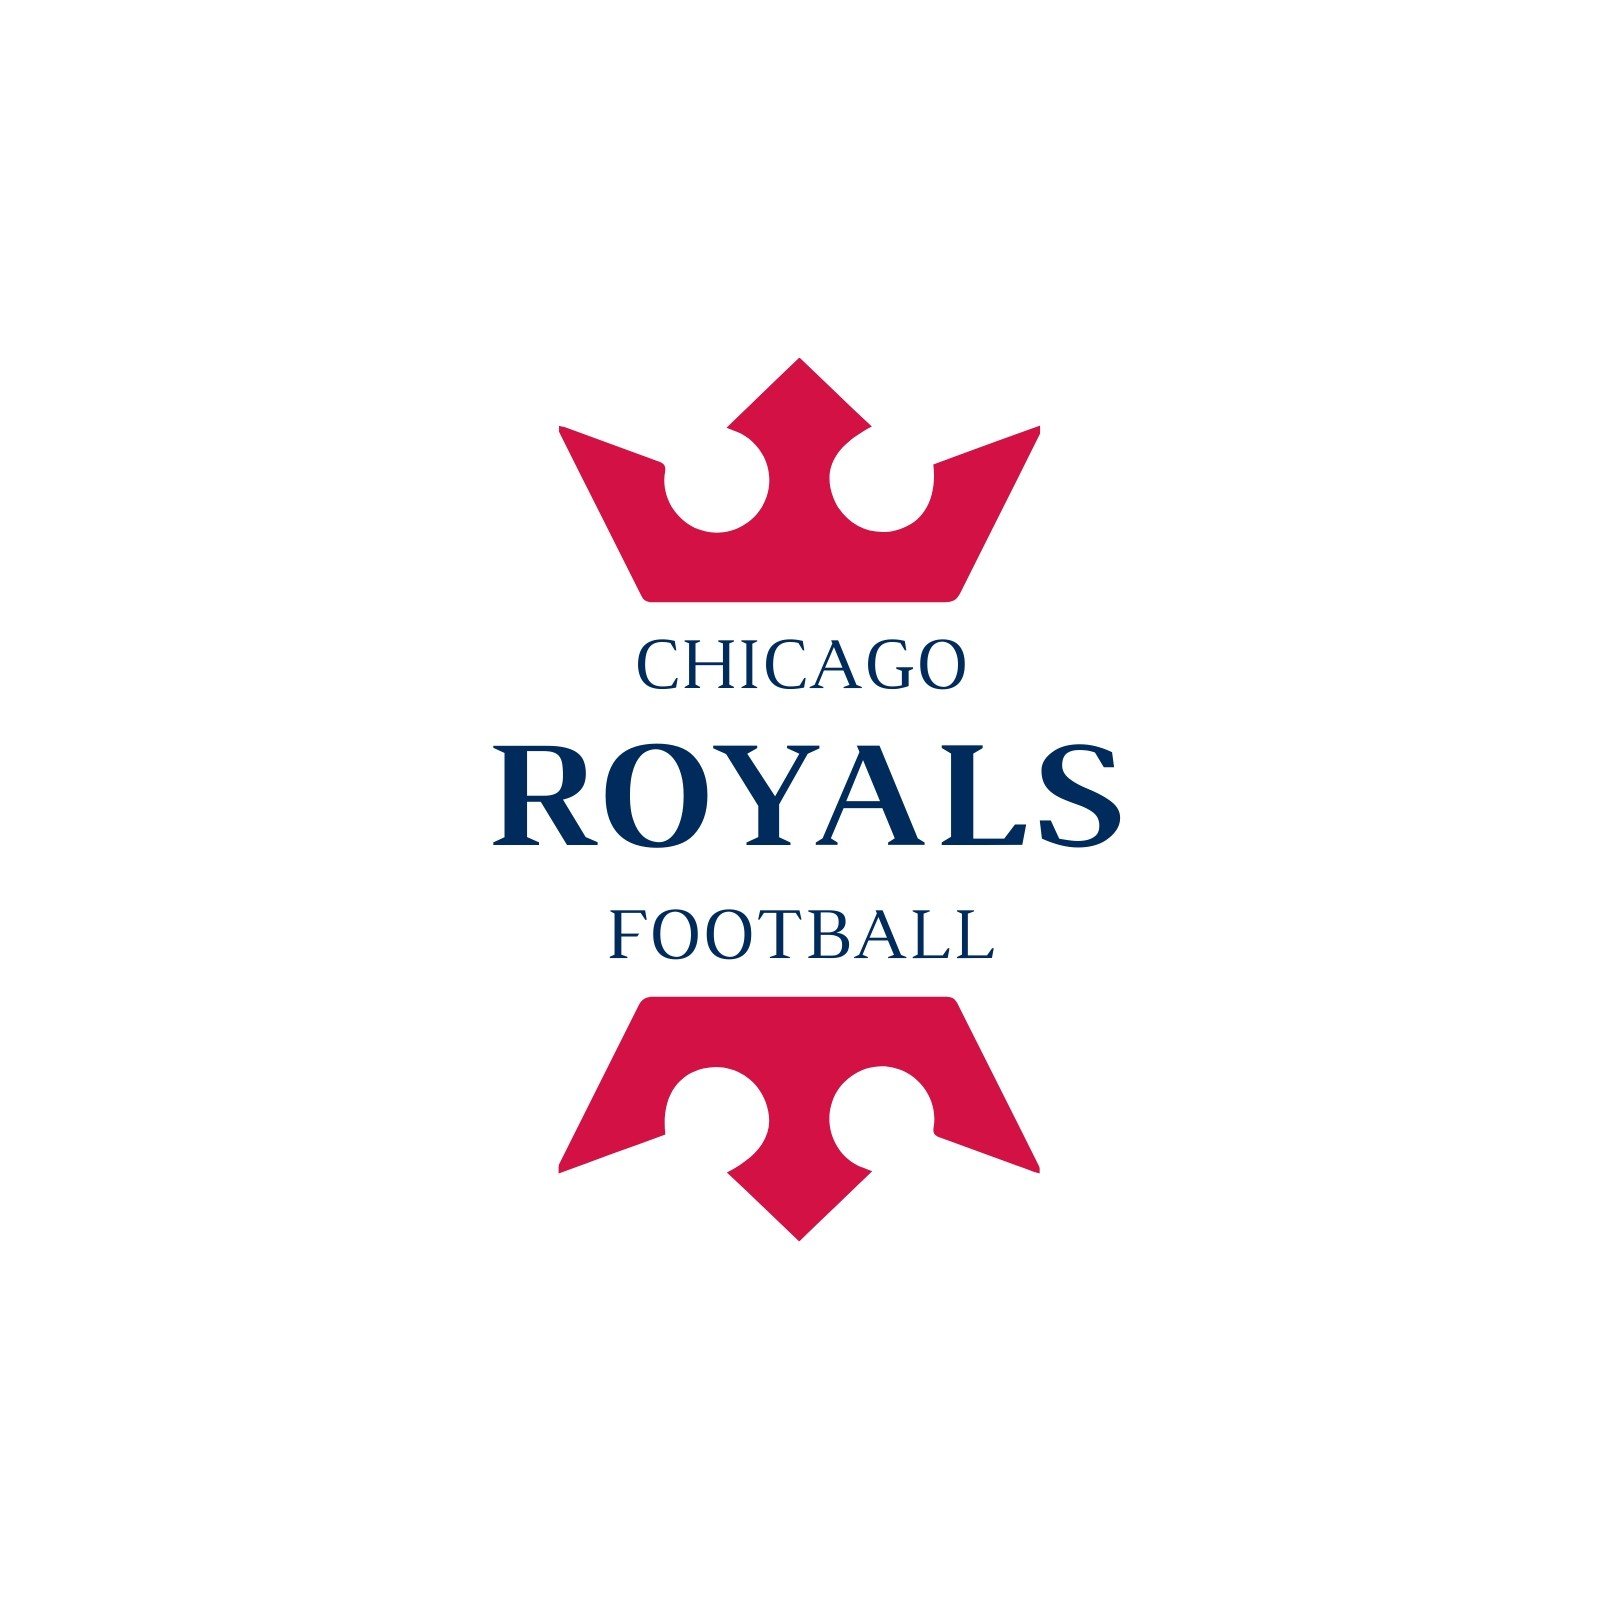 Customize 465+ Football Logo Templates Online - Canva